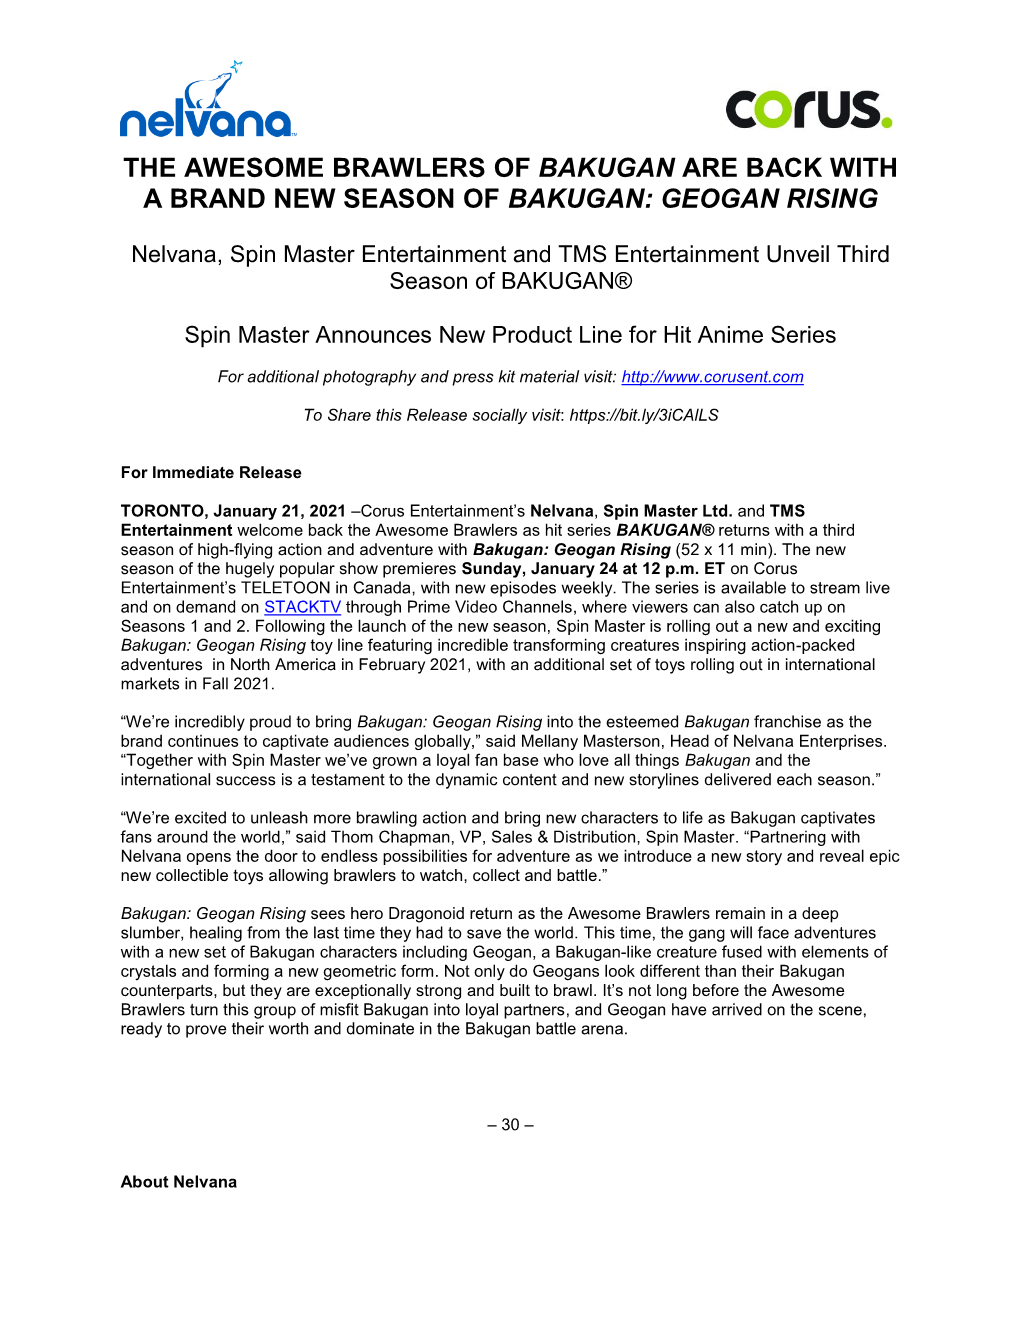 The Awesome Brawlers of Bakugan Are Back with a Brand New Season of Bakugan: Geogan Rising